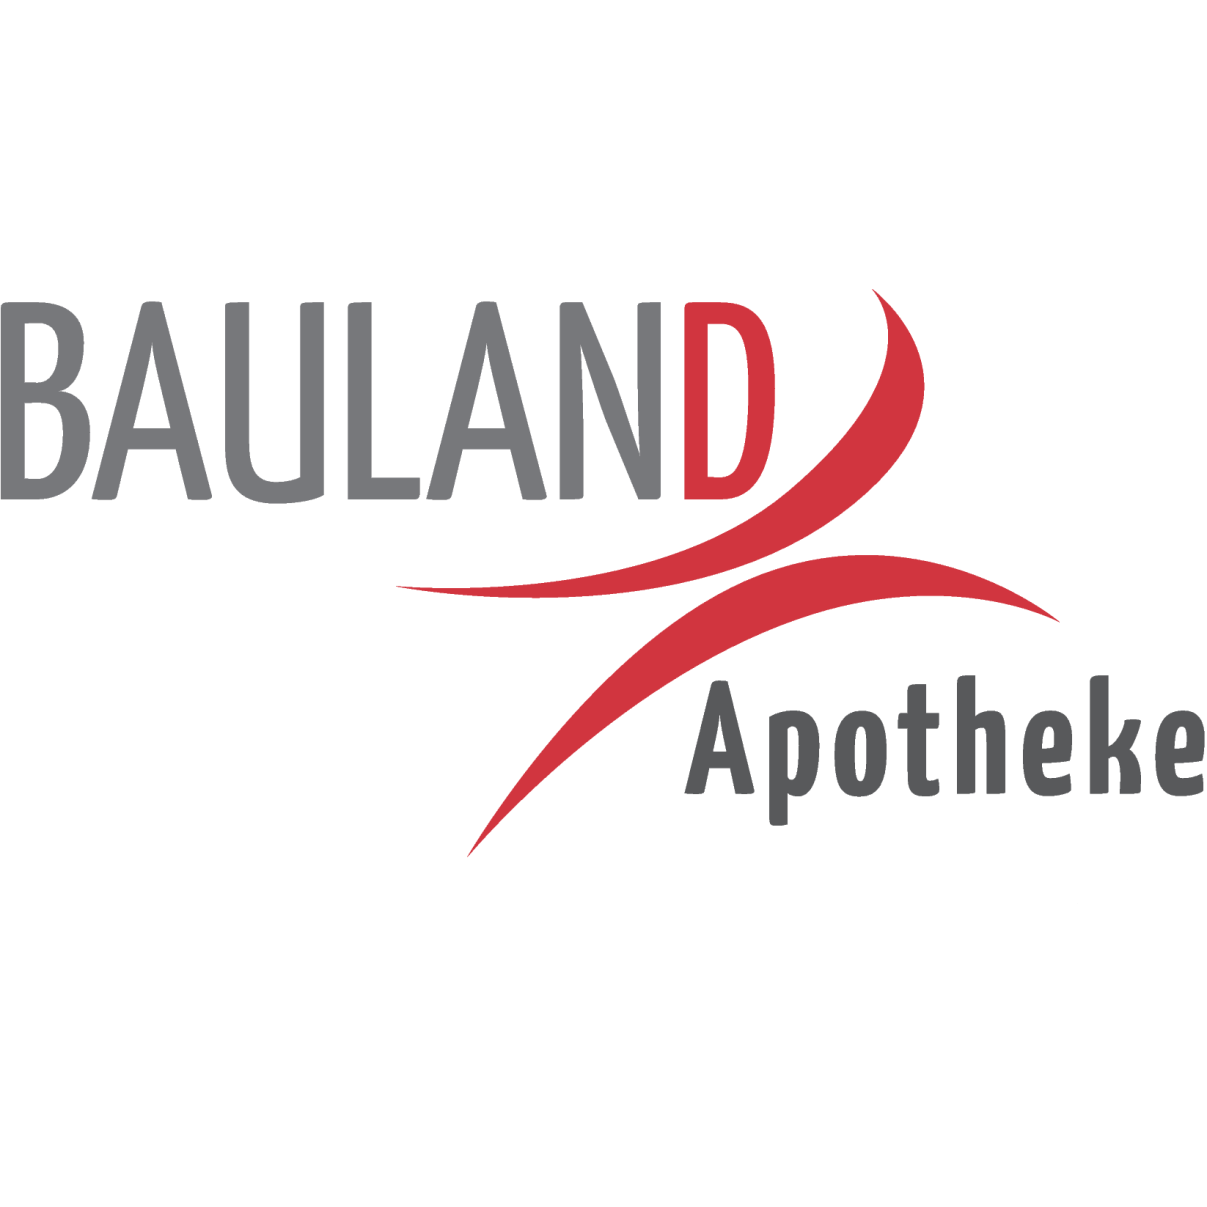 Bauland-Apotheke Adelsheim